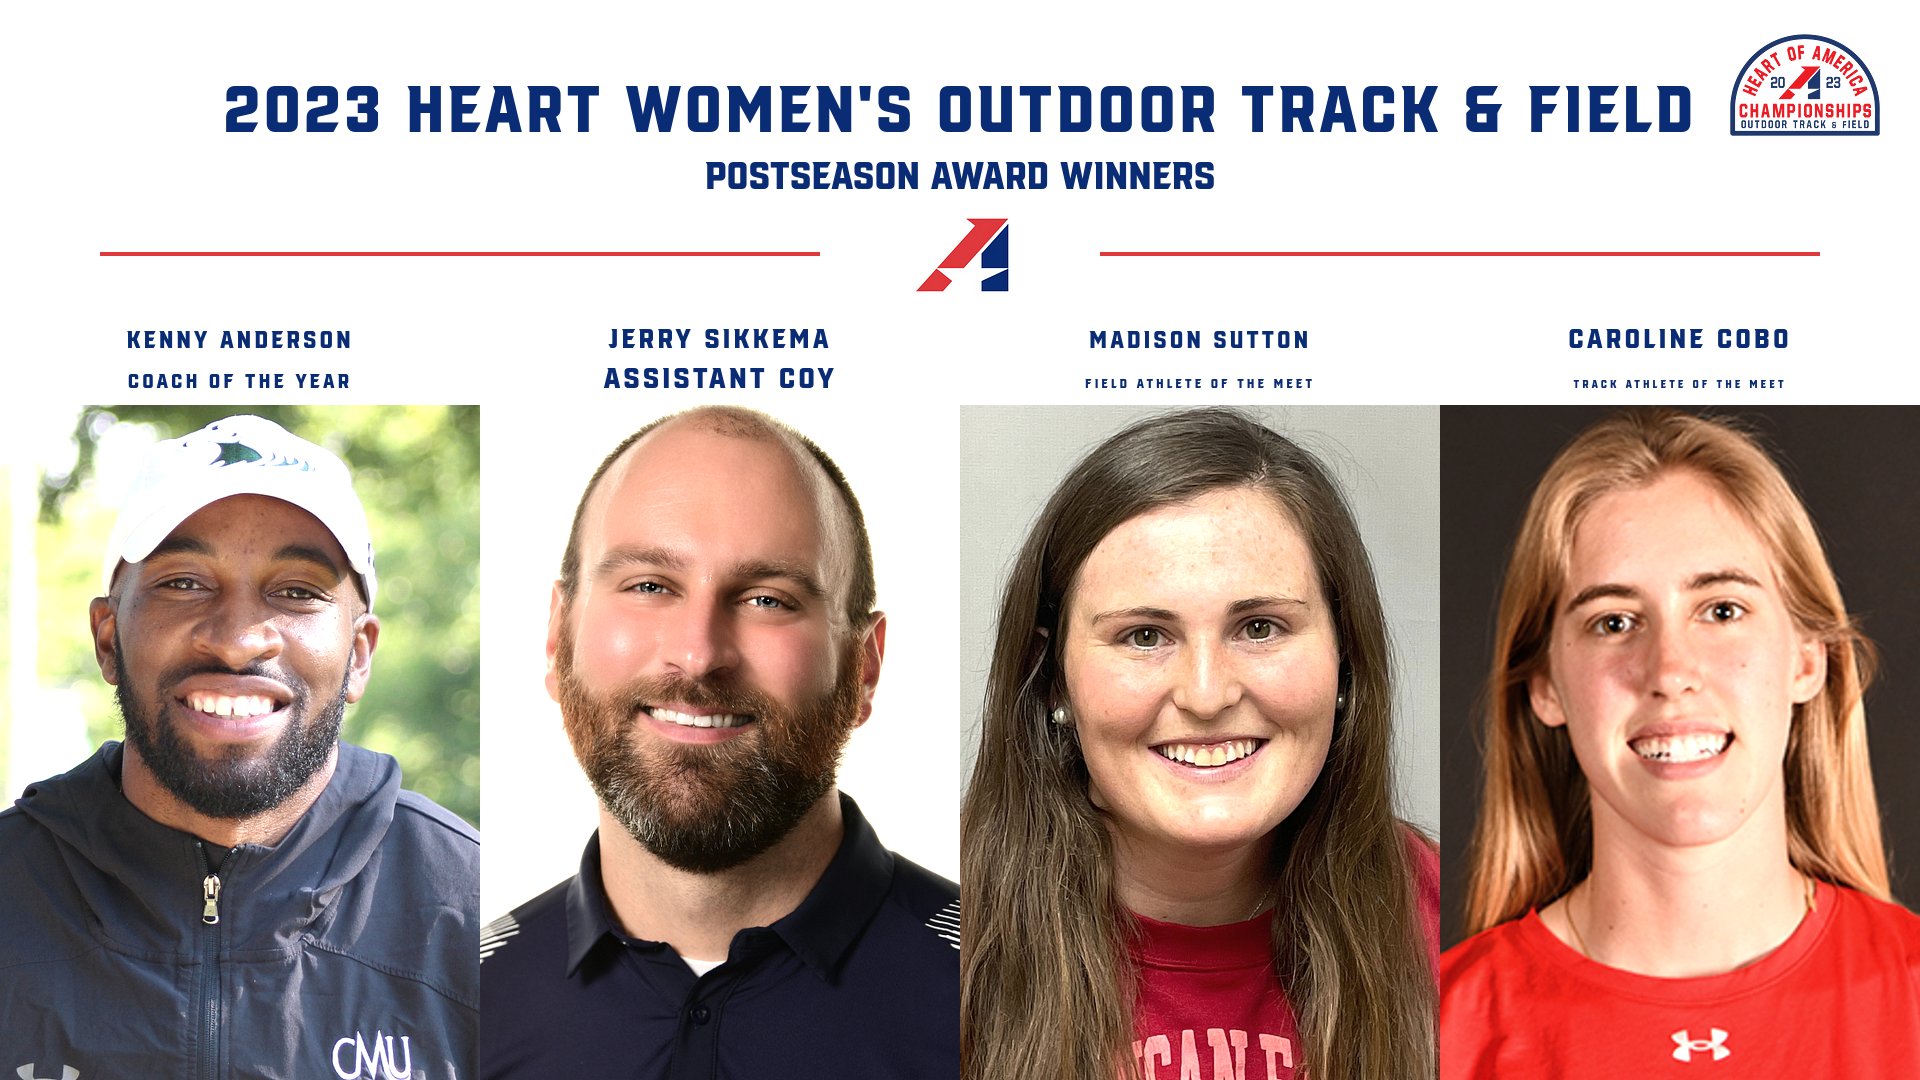 2023 Heart Women's Outdoor Track & Field Postseason Awards Announced